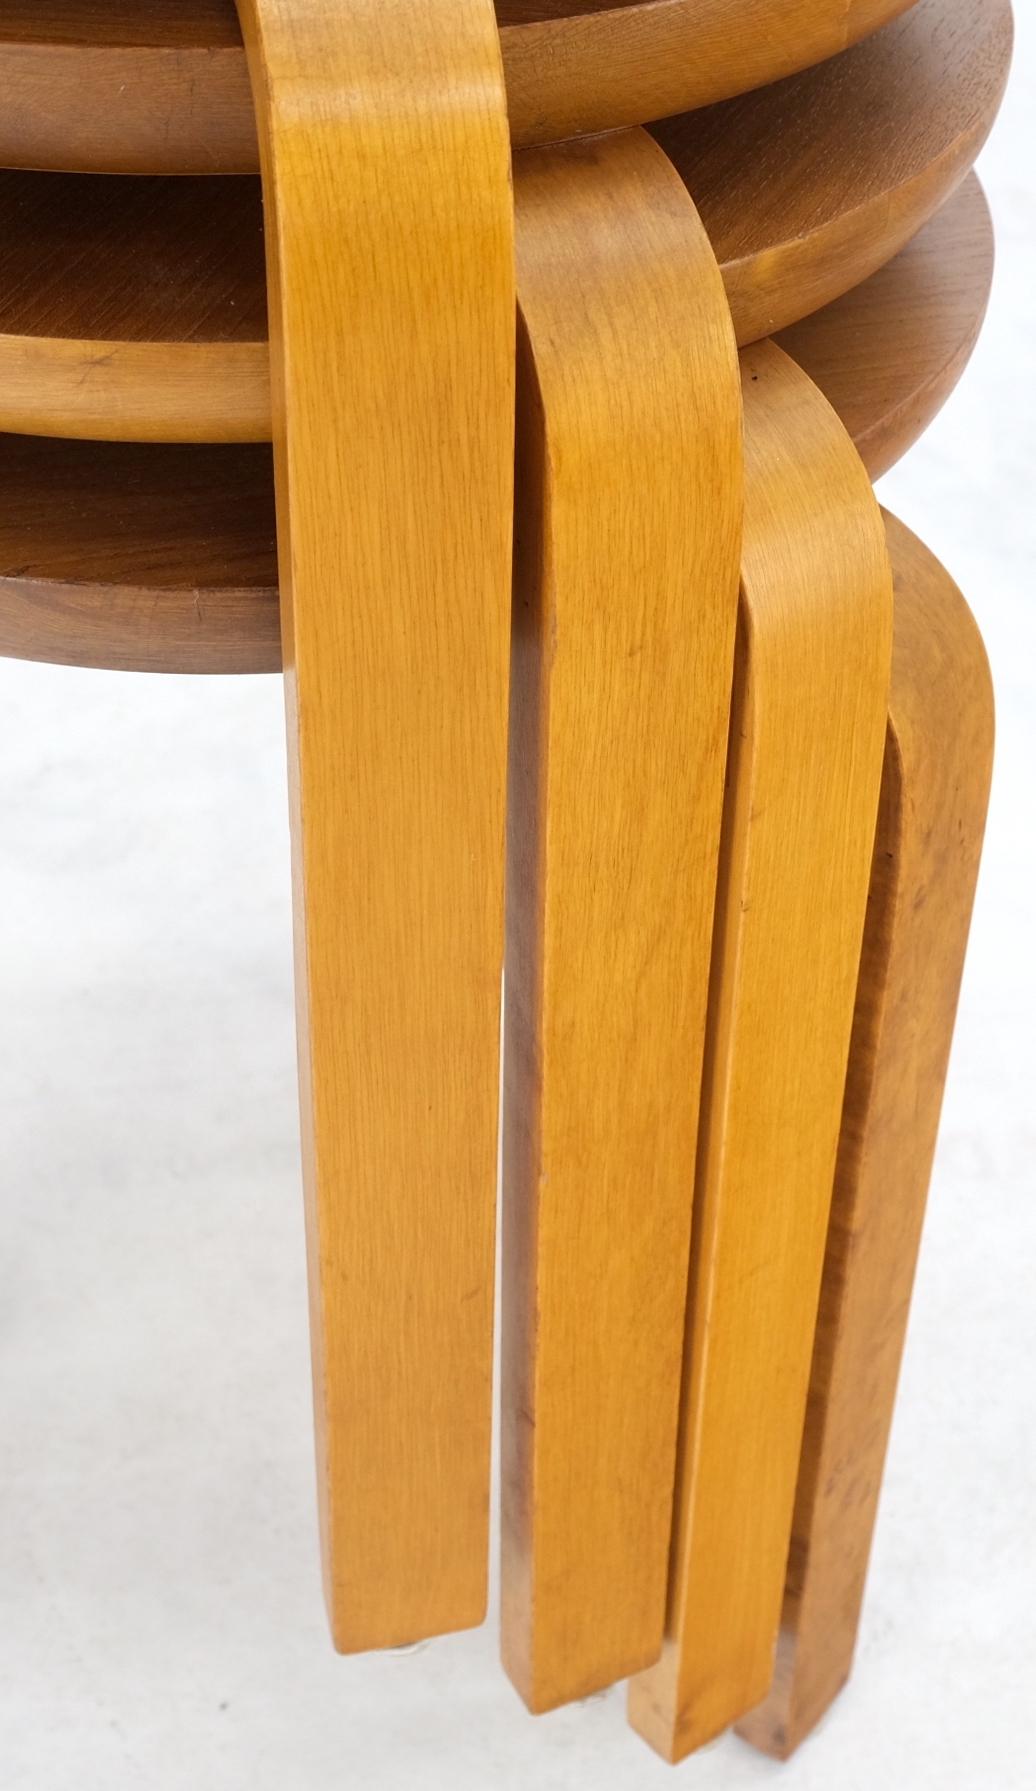 Set of 4 Alvar Aalto Round Birch Bent Leg Nesting Tables c.1950s Made in Sweden For Sale 3